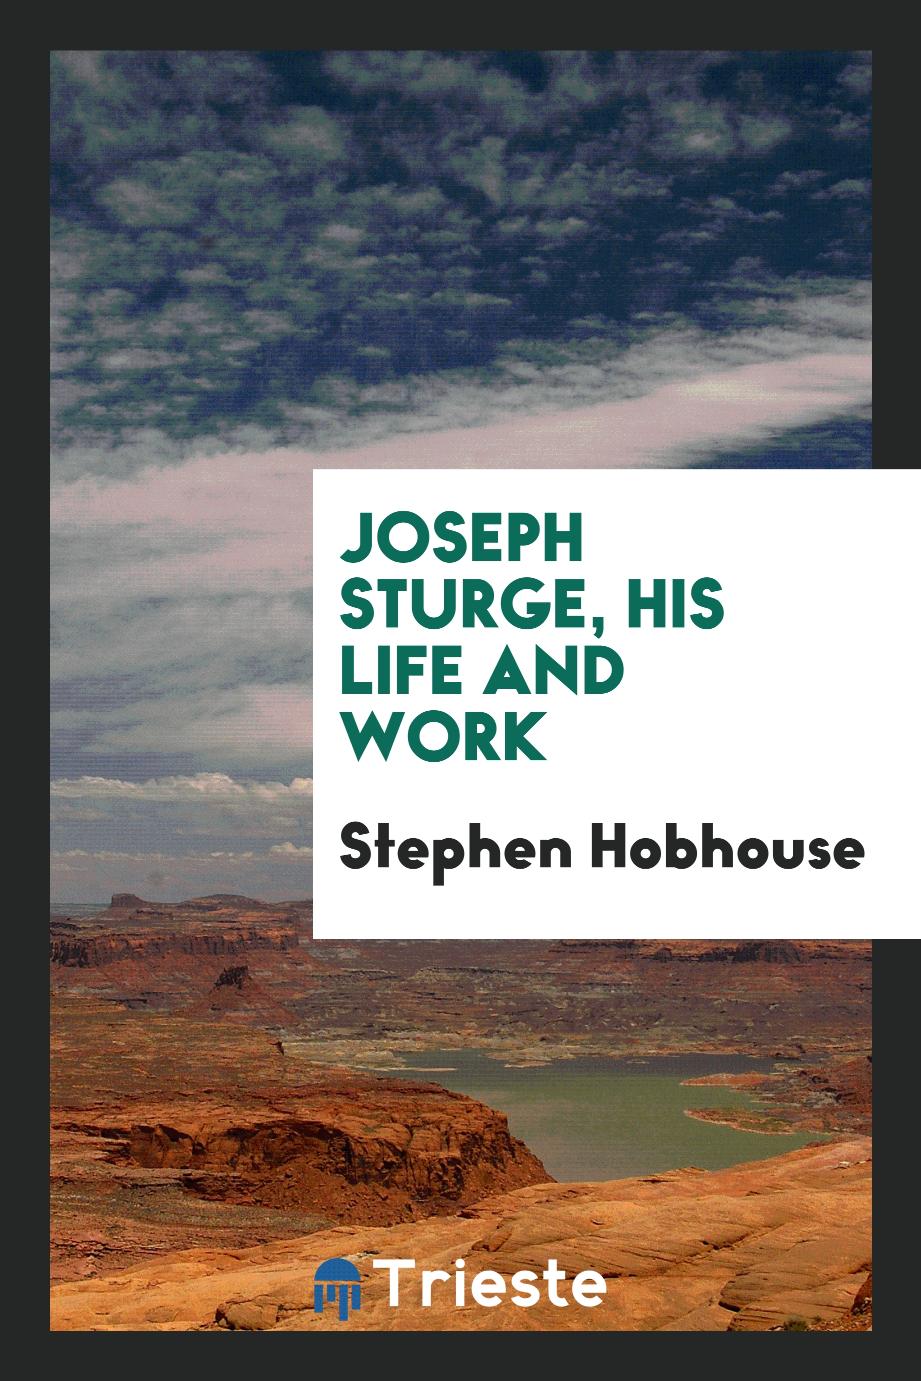 Joseph Sturge, his life and work